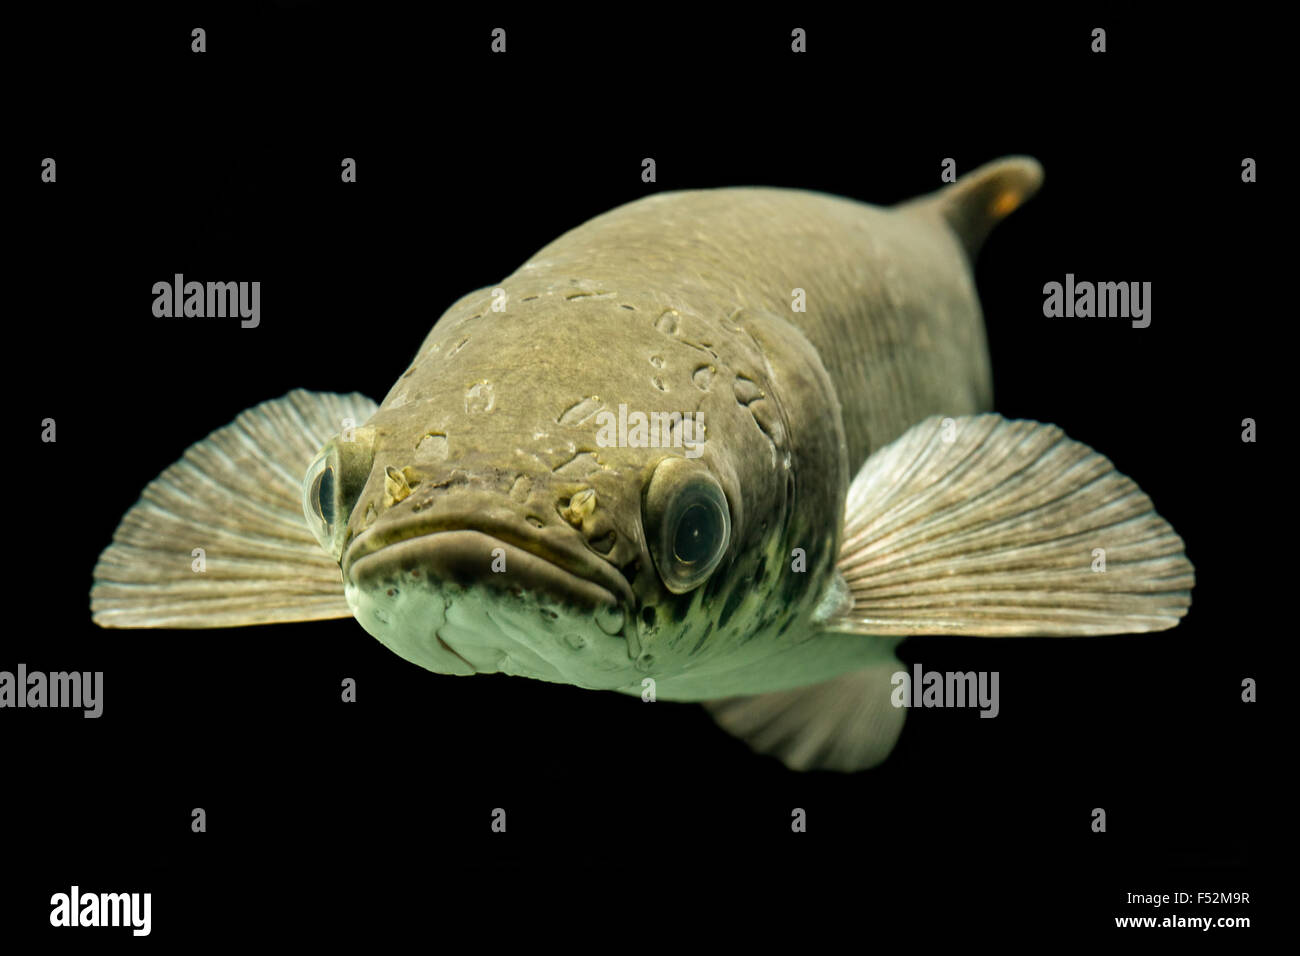 Head Shot Of Arapaima Gigas Leptosoma Underwater Studio Aquarium Shot Stock Photo